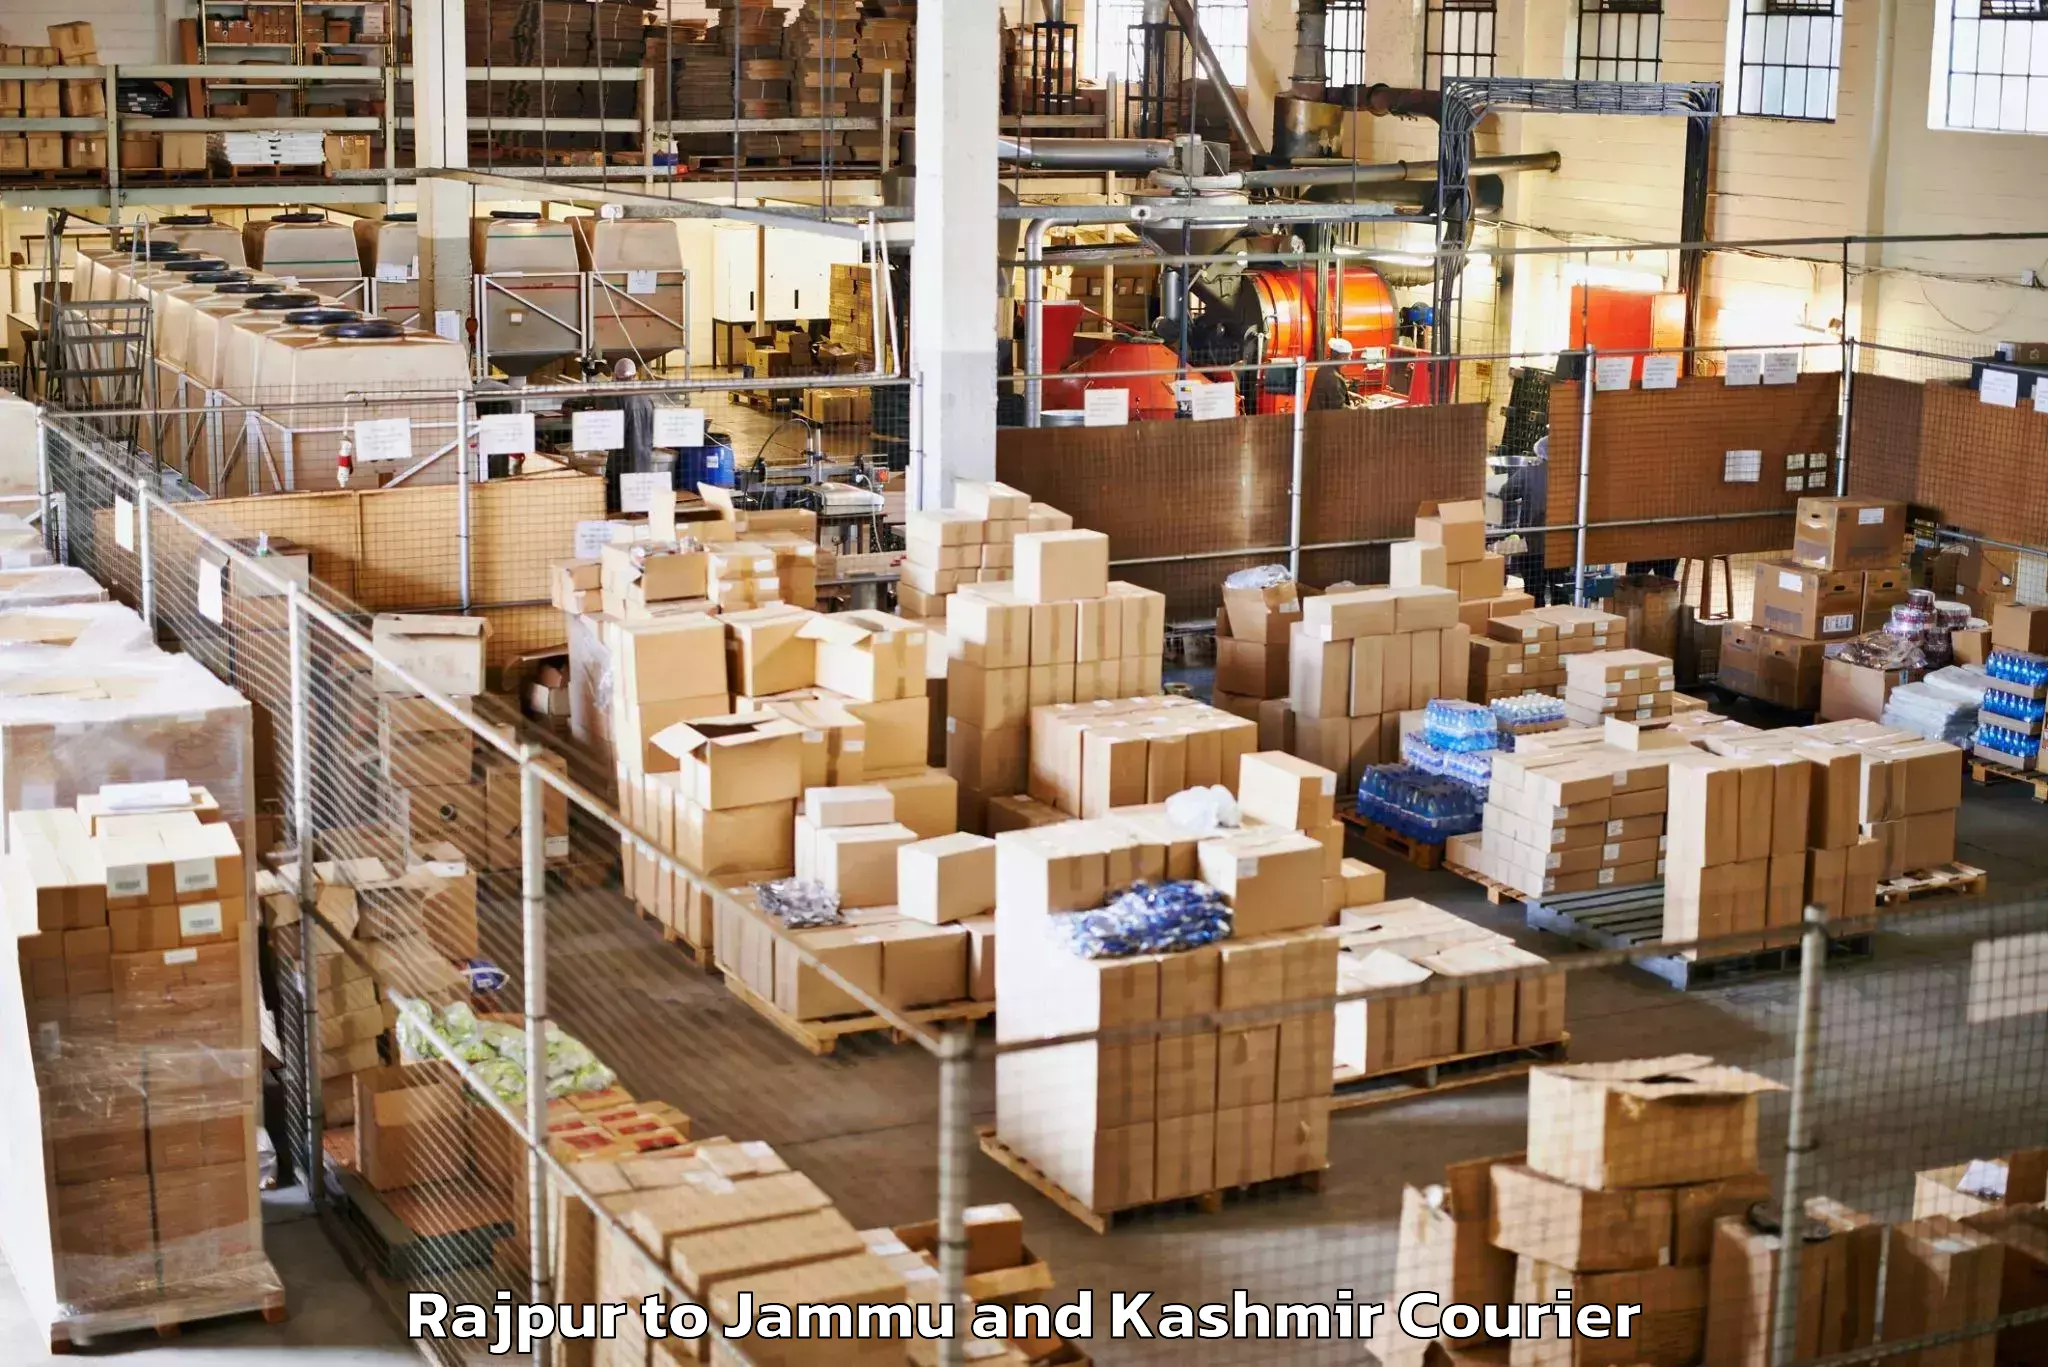 Urgent luggage shipment in Rajpur to Srinagar Kashmir